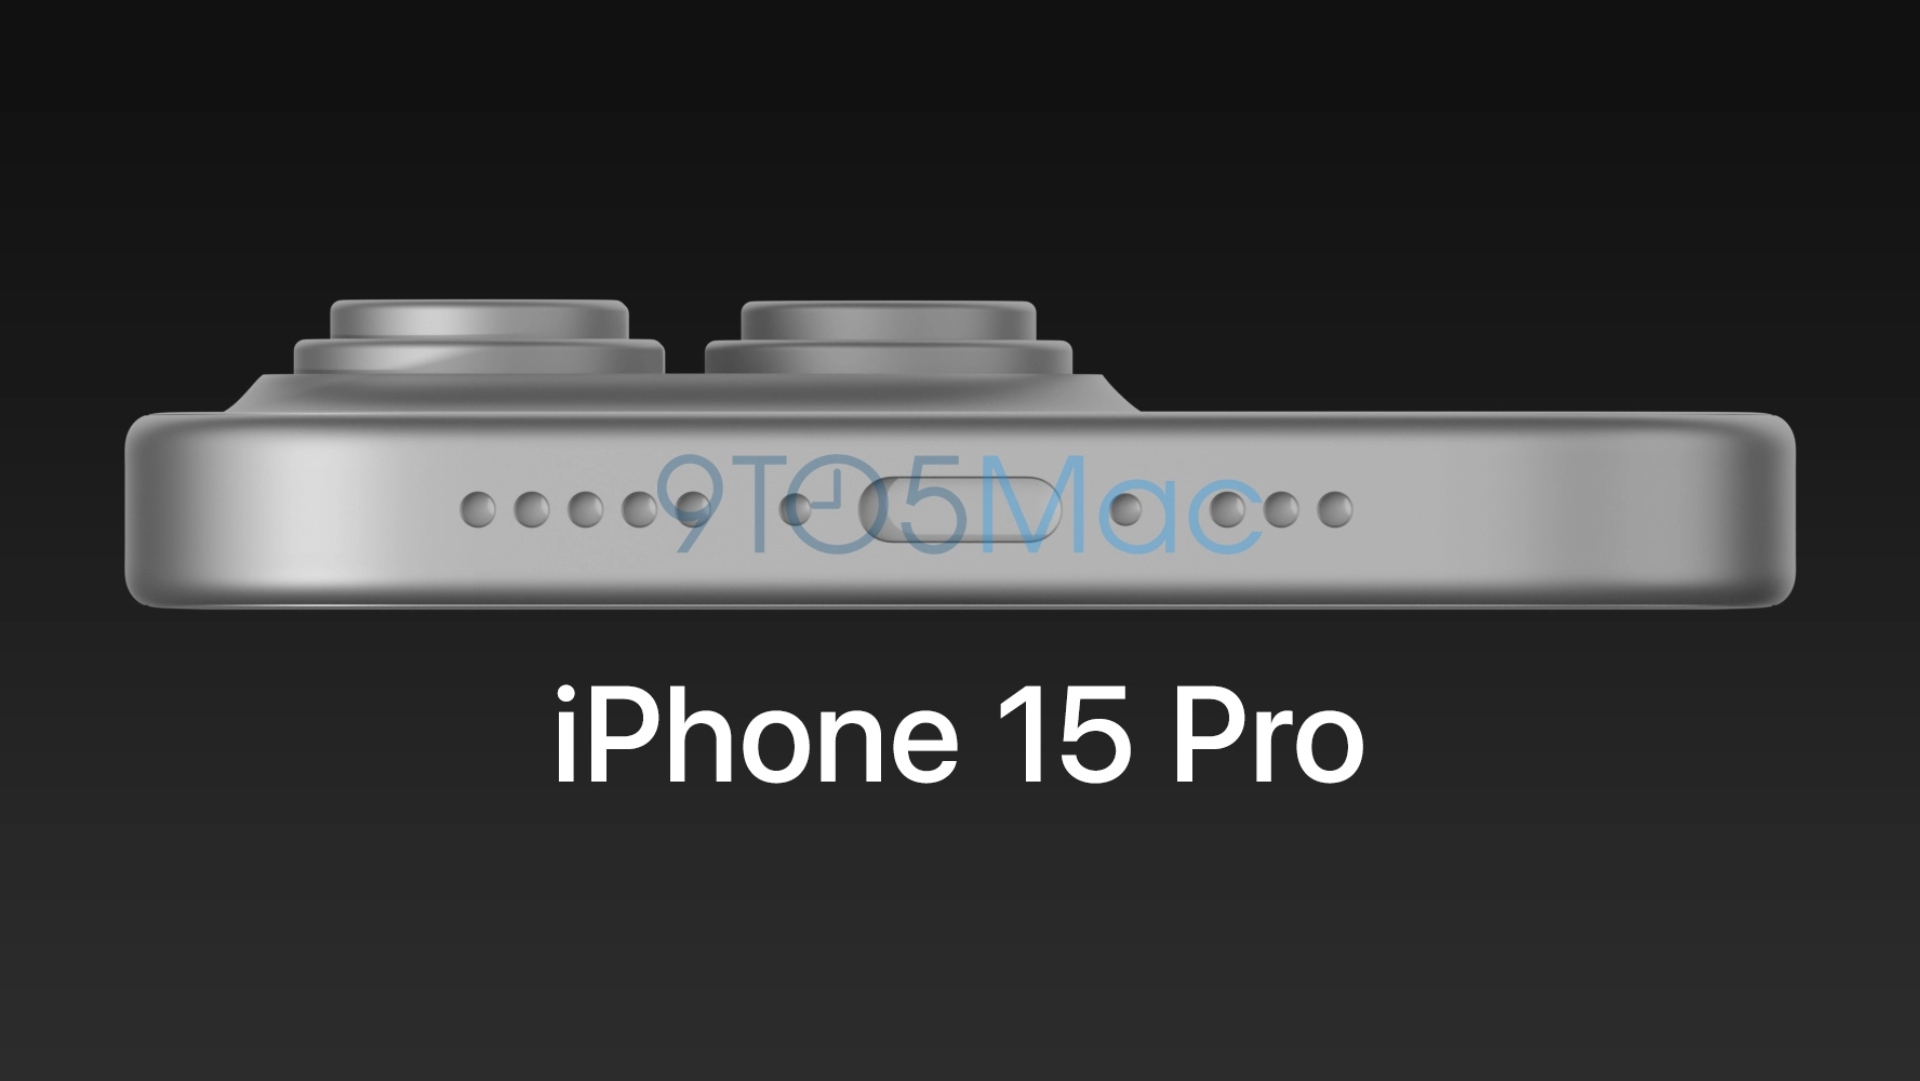 iphone 15 pro render 3